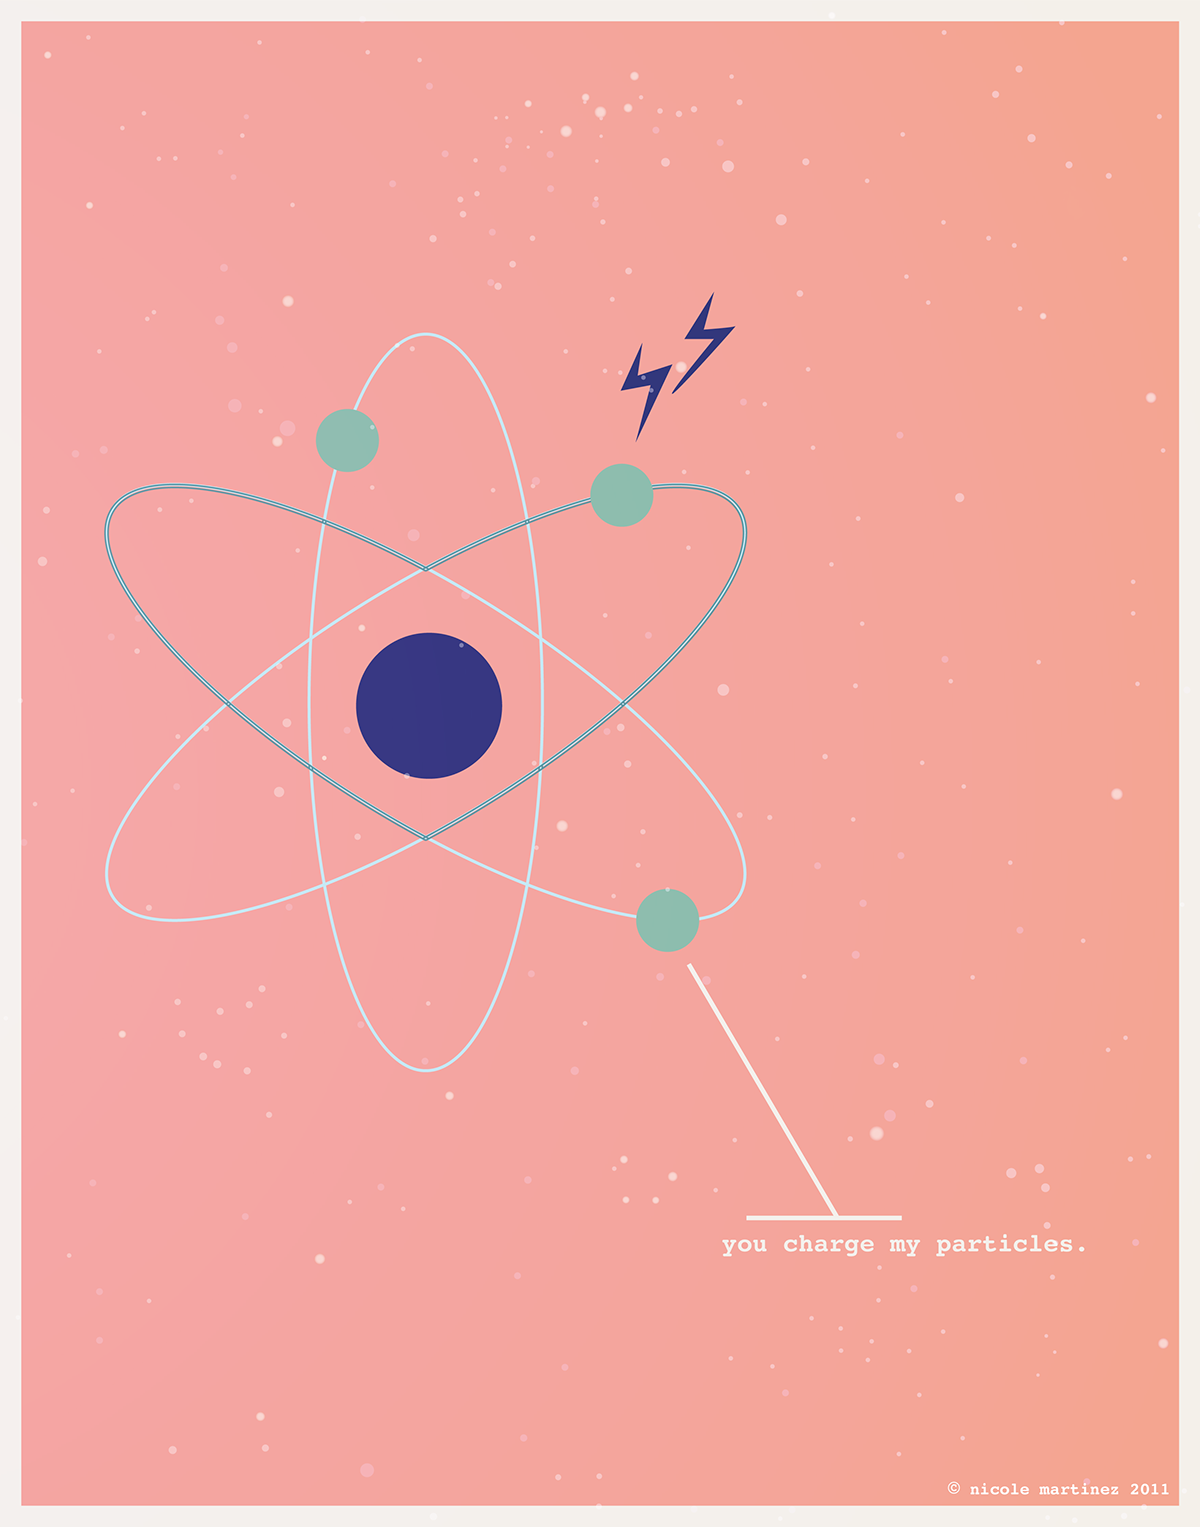 nerd nerdy nerdlove science Fun posters greeting cards